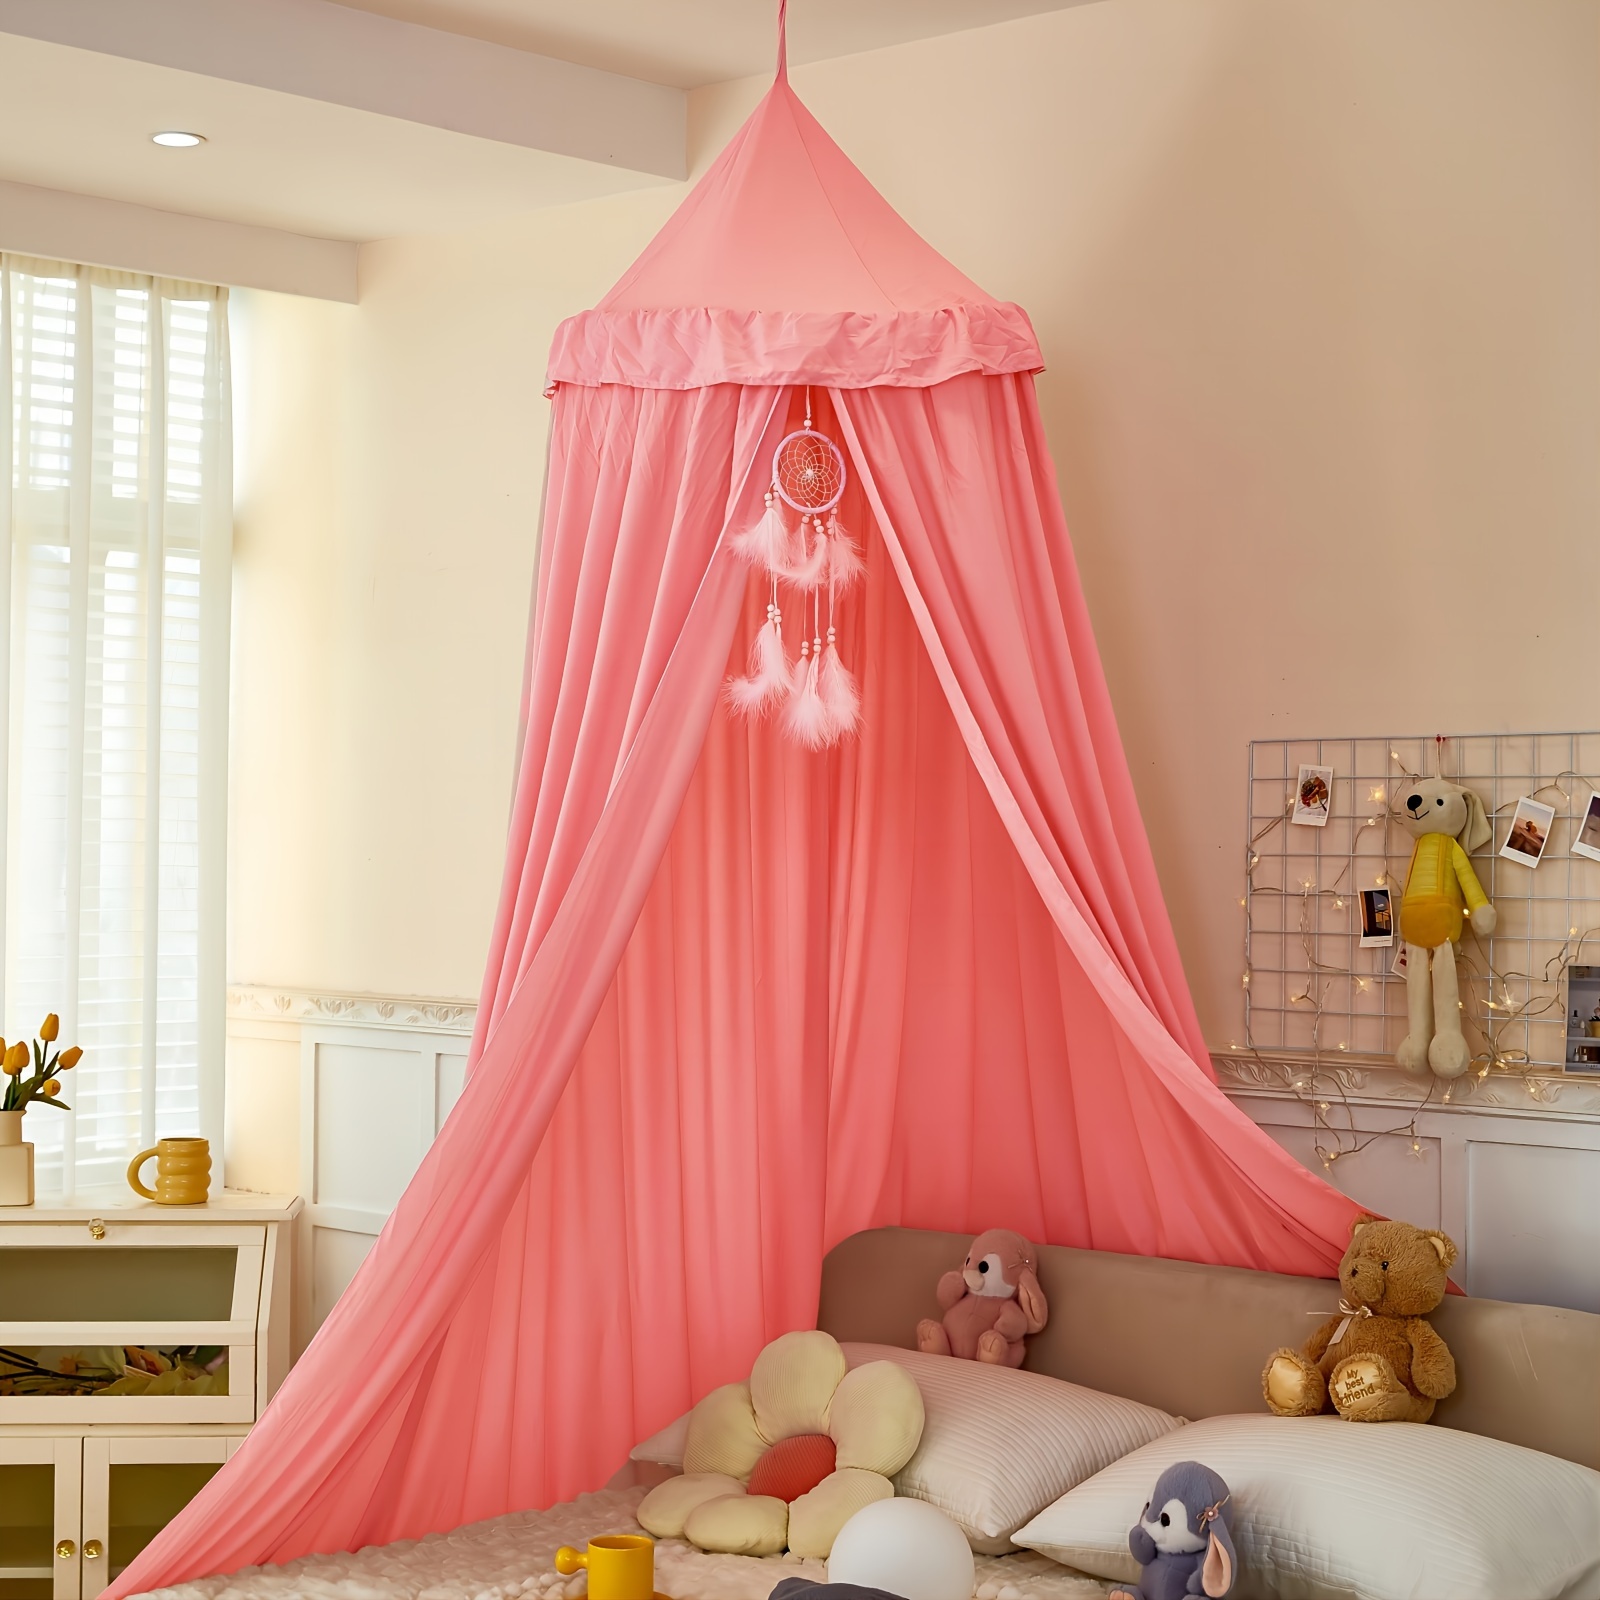 Toldo de cama infantil para habitación de niñas, toldo de princesa rosa  suave para cortinas de cama de niñas, decoración de ensueño para habitación  de